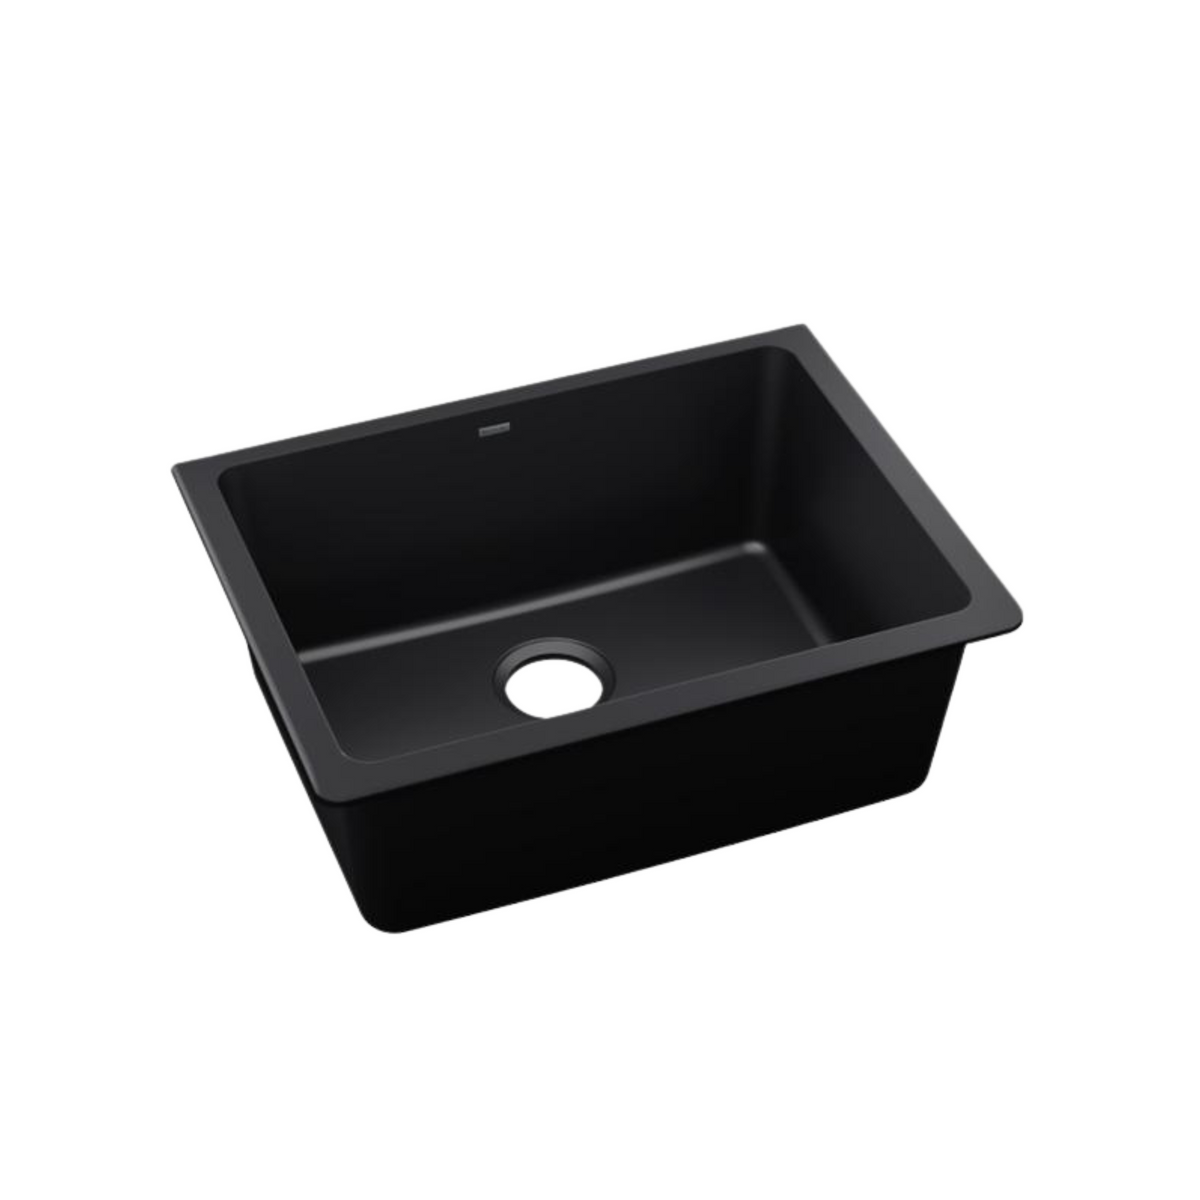 Elkay Quartz Luxe 24-5/8" x 18-1/2" x 9-1/2" Single Bowl Undermount Sink Caviar